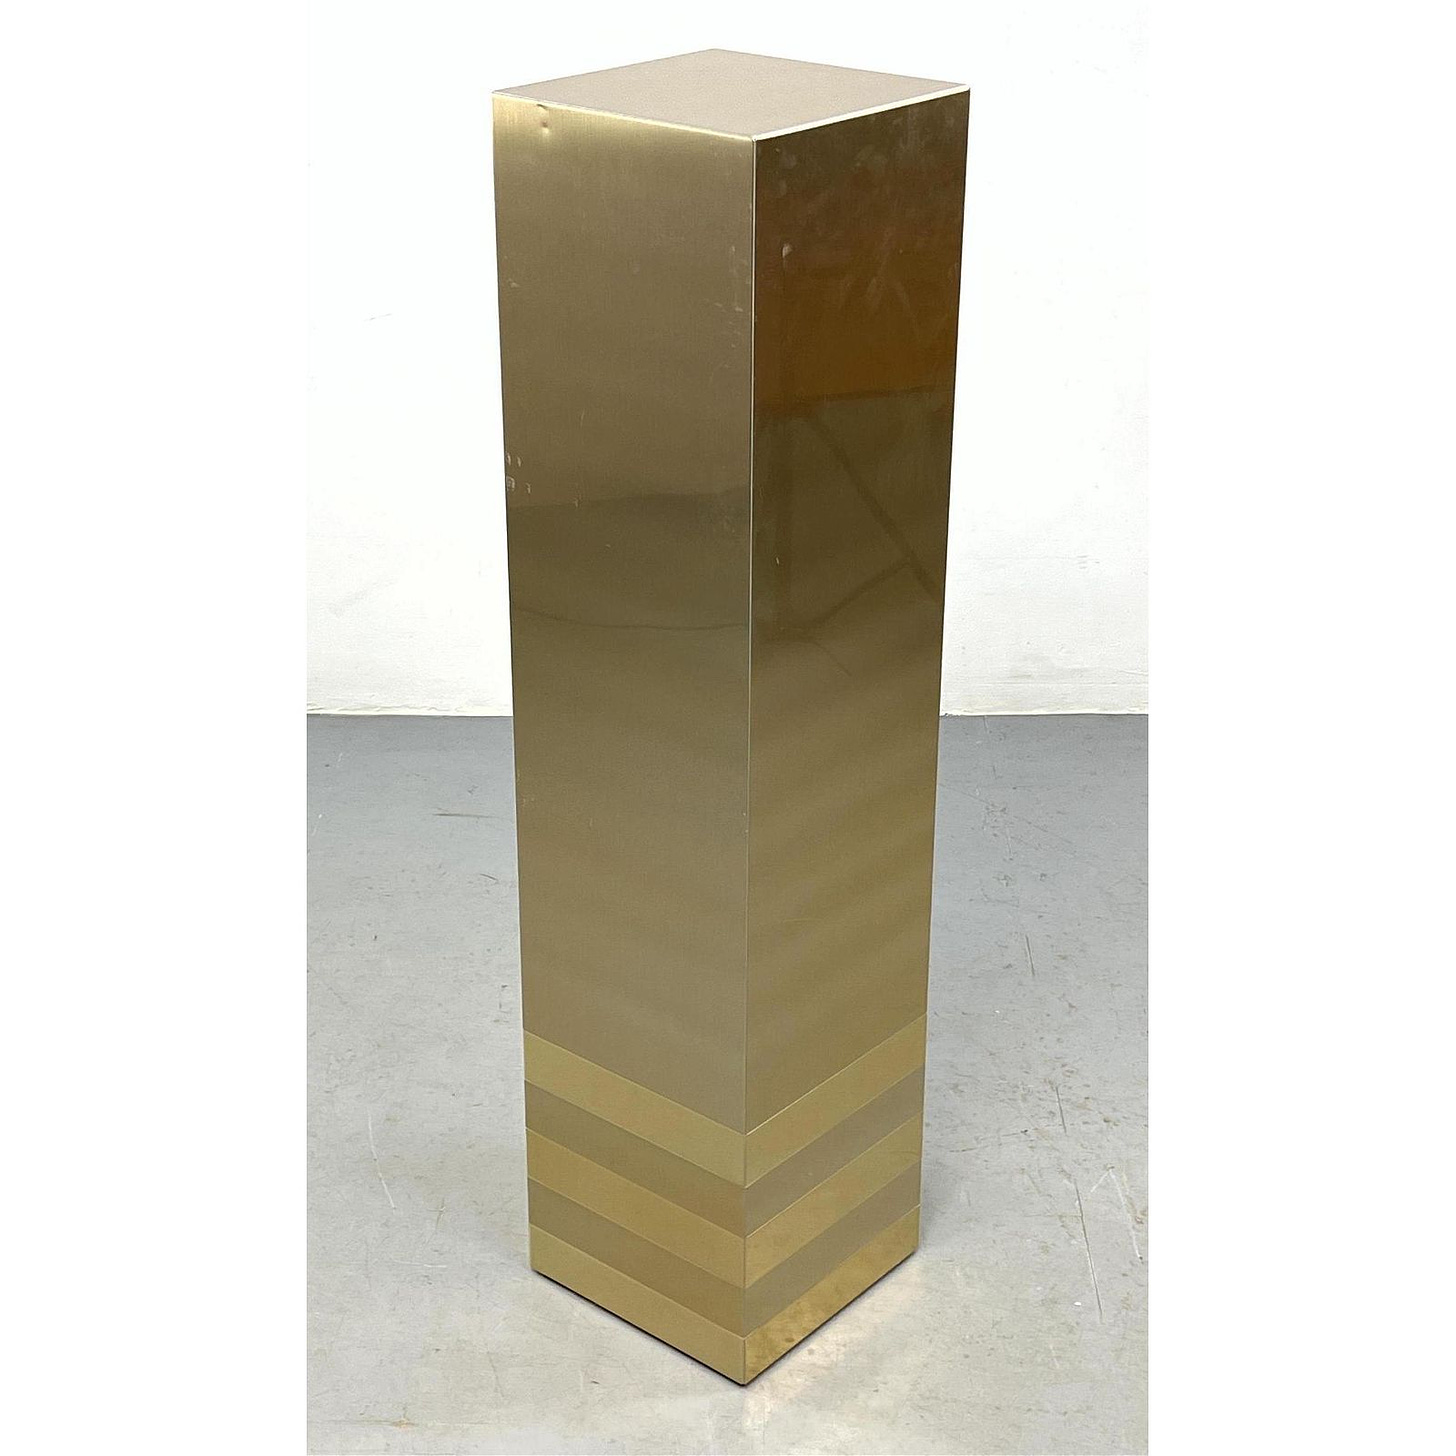 1981 Tall Satin Finish Metallic Display Pedestal. Gold tone with contrasting stripe trim around bott